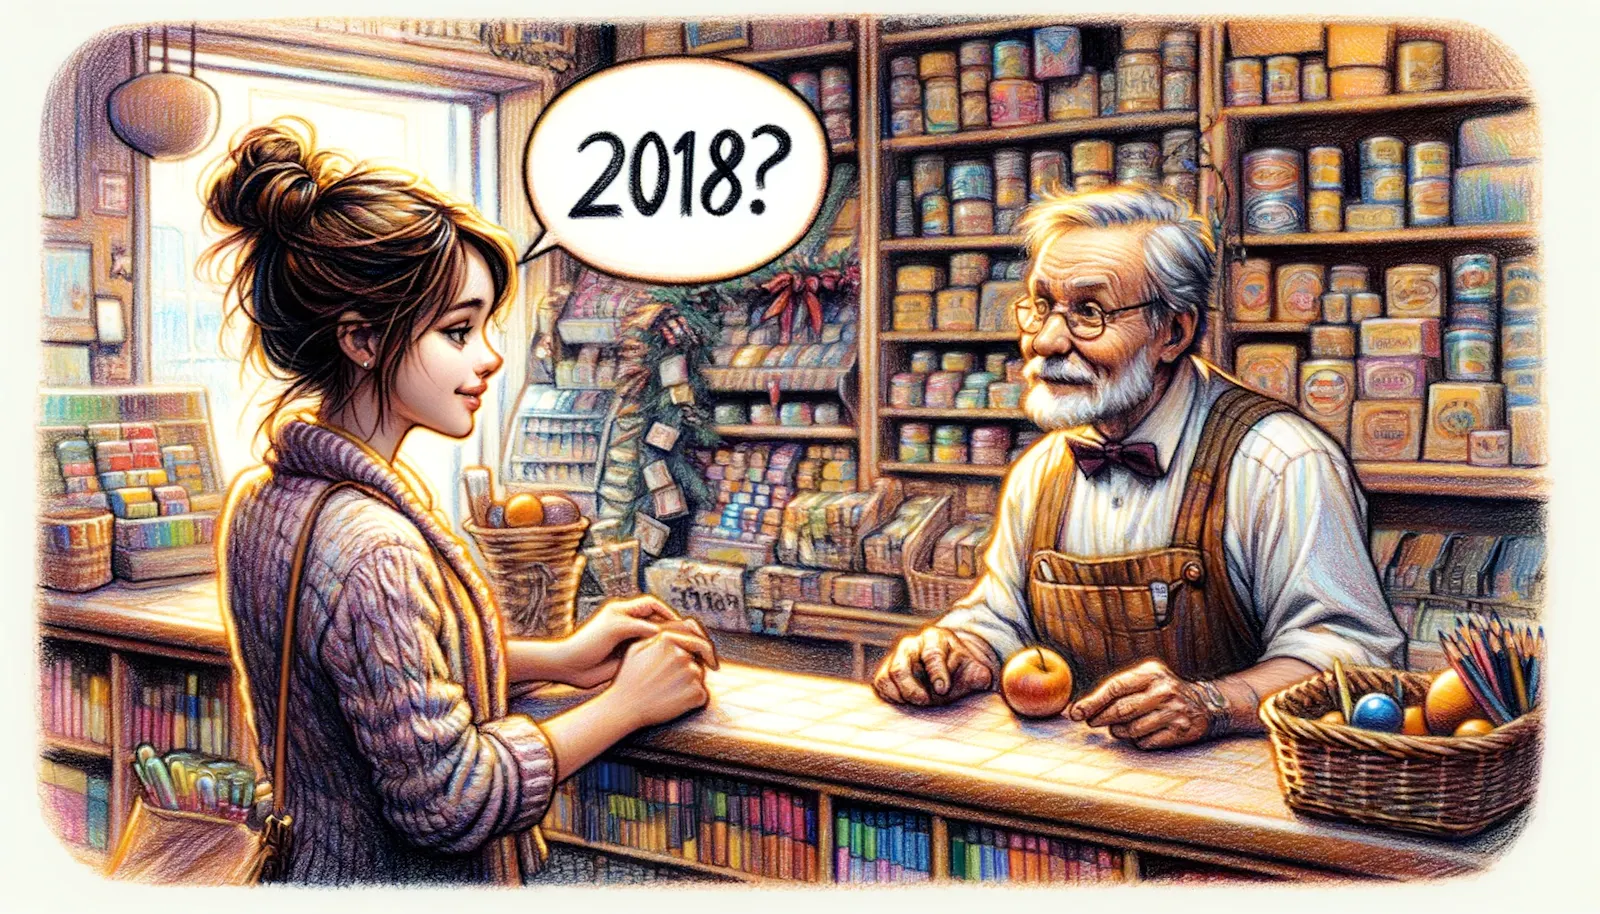 A woman asking a shop clerk "2018?"